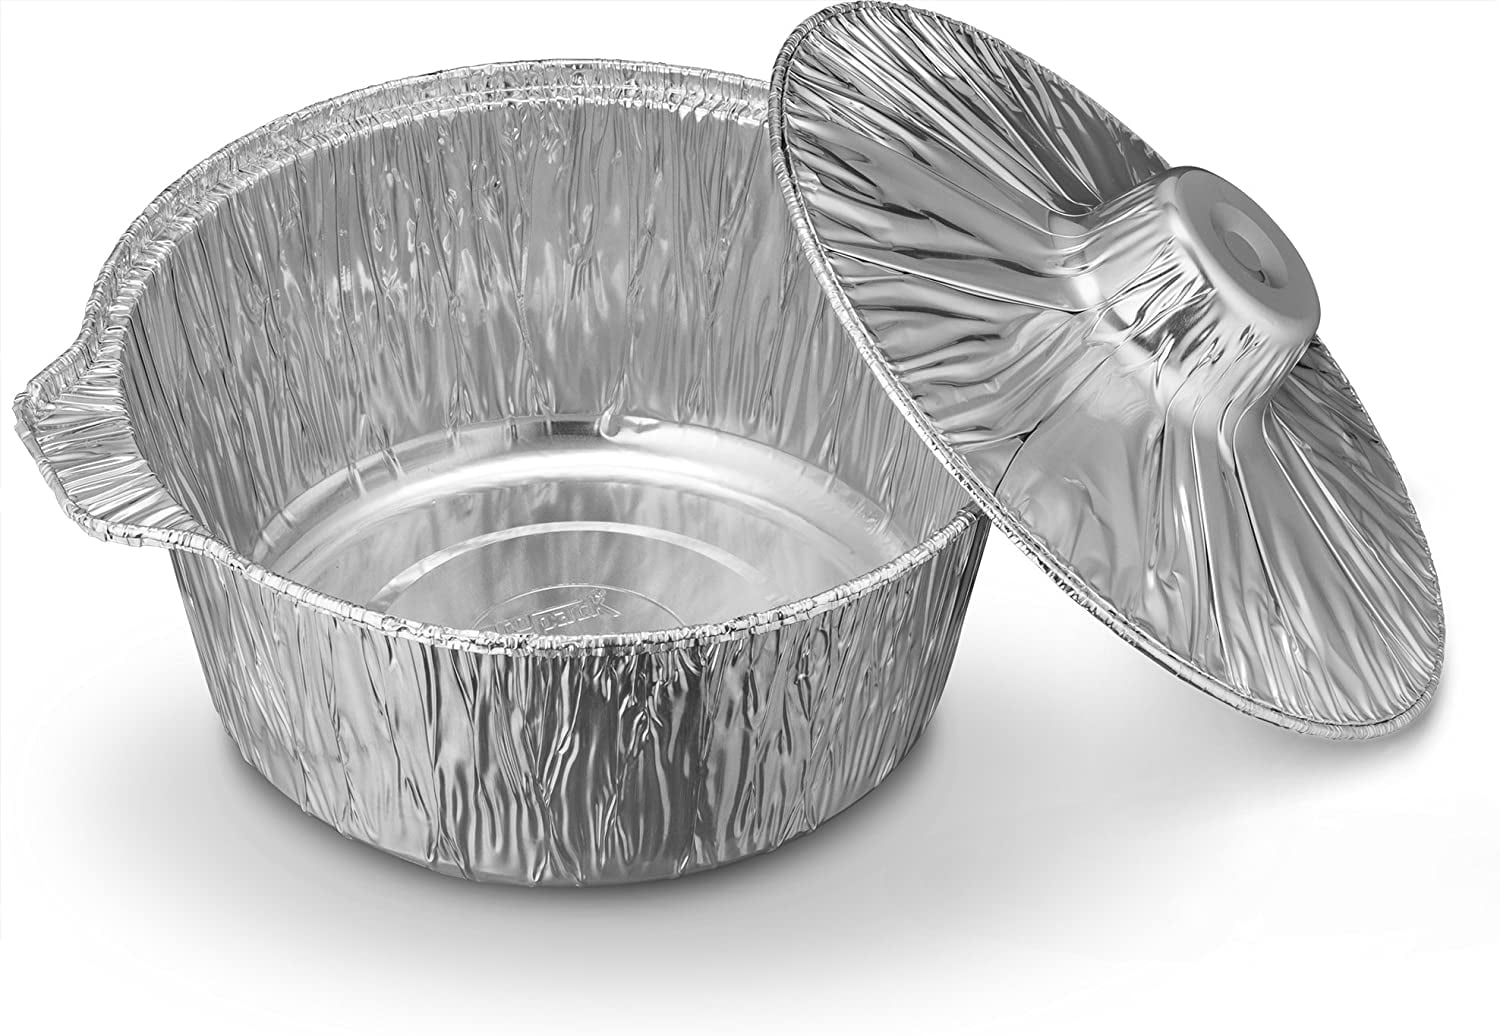 Jetfoil Disposable Aluminum Challah Oval Foil Pan Small 2lb